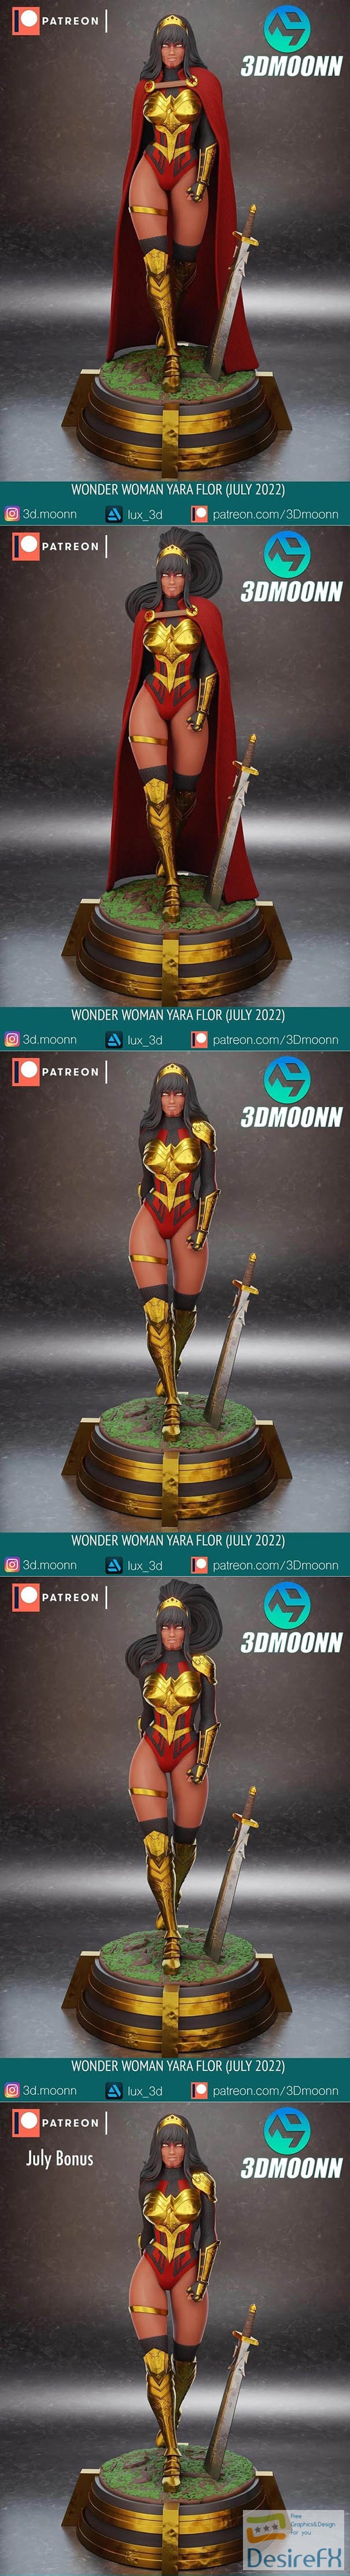 Wonder Woman Yara Flor 3Dmoonn 3D Print